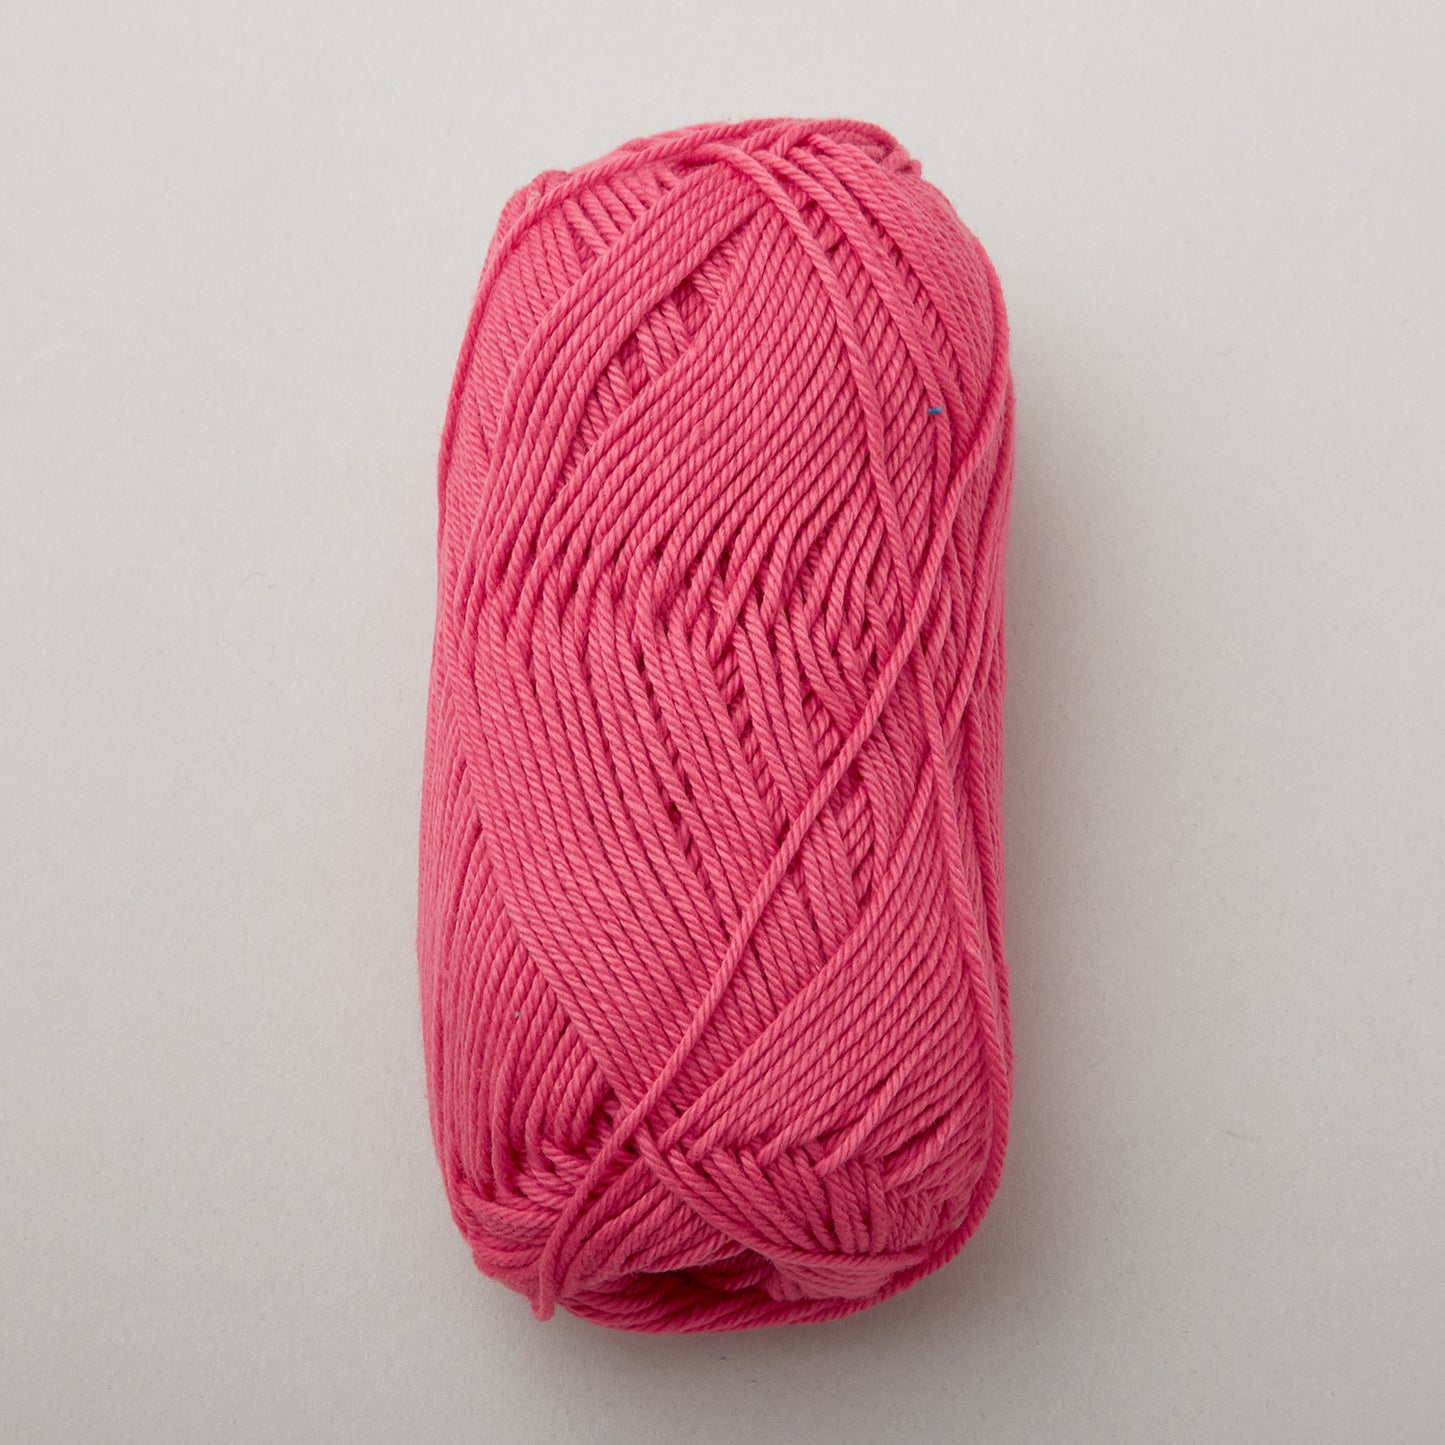 Lori Holt Chunky Crochet Thread Tea Rose (32997) Alternative View #1